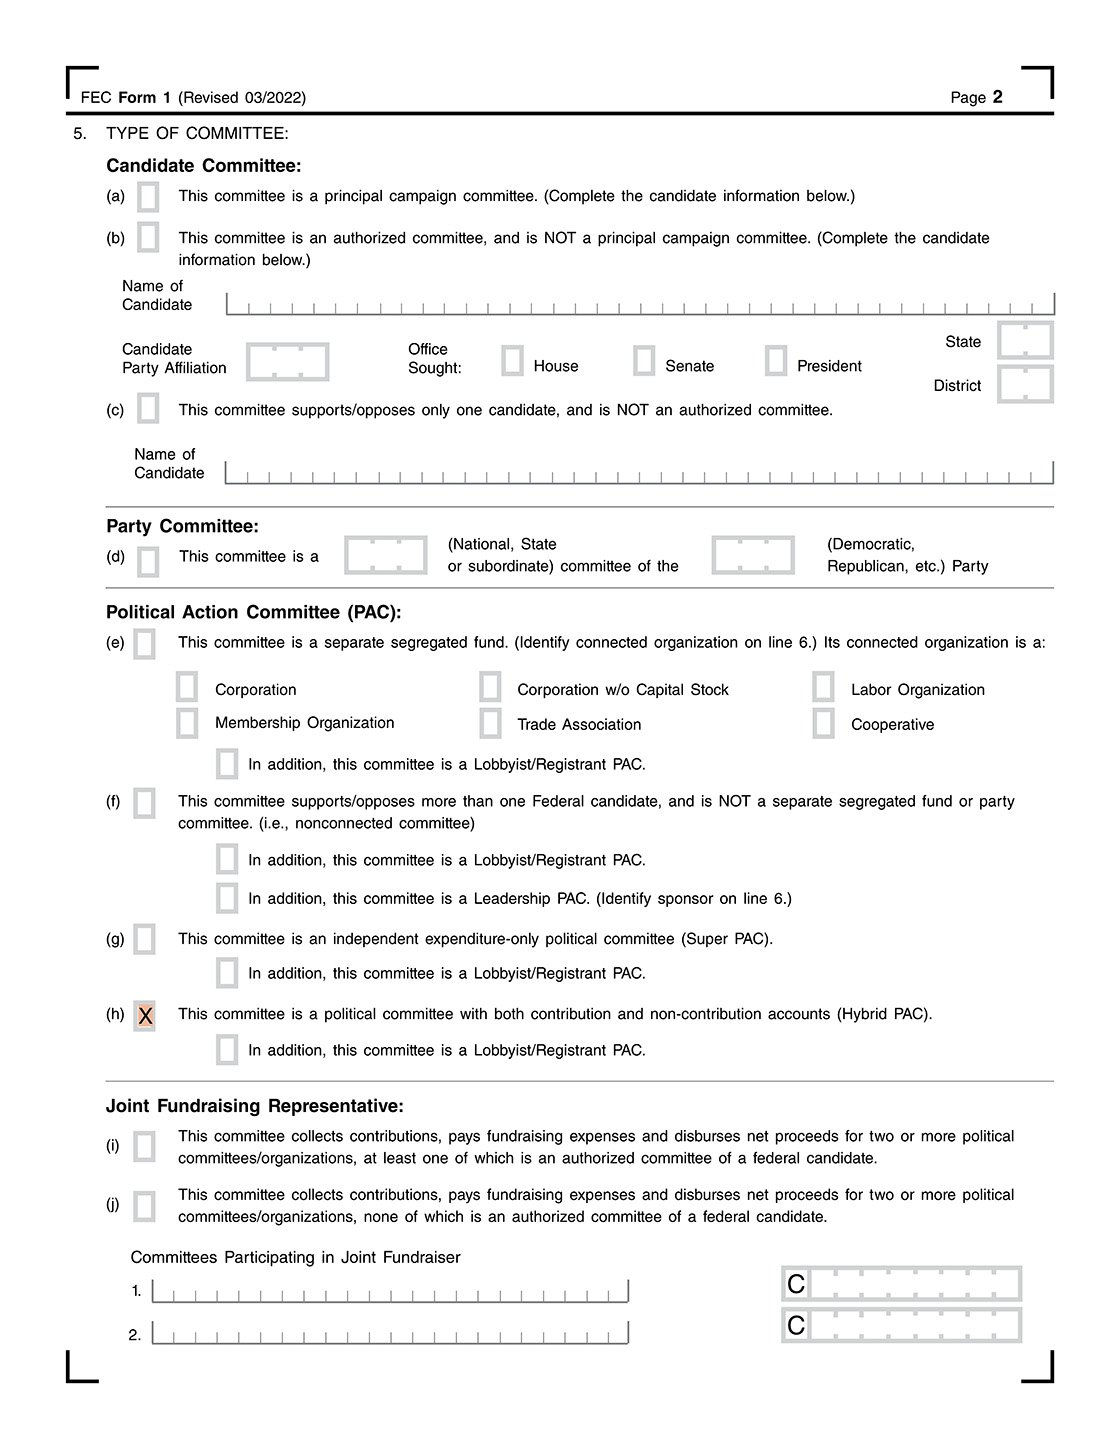 Hybrid PAC Registration_Form1_Page2